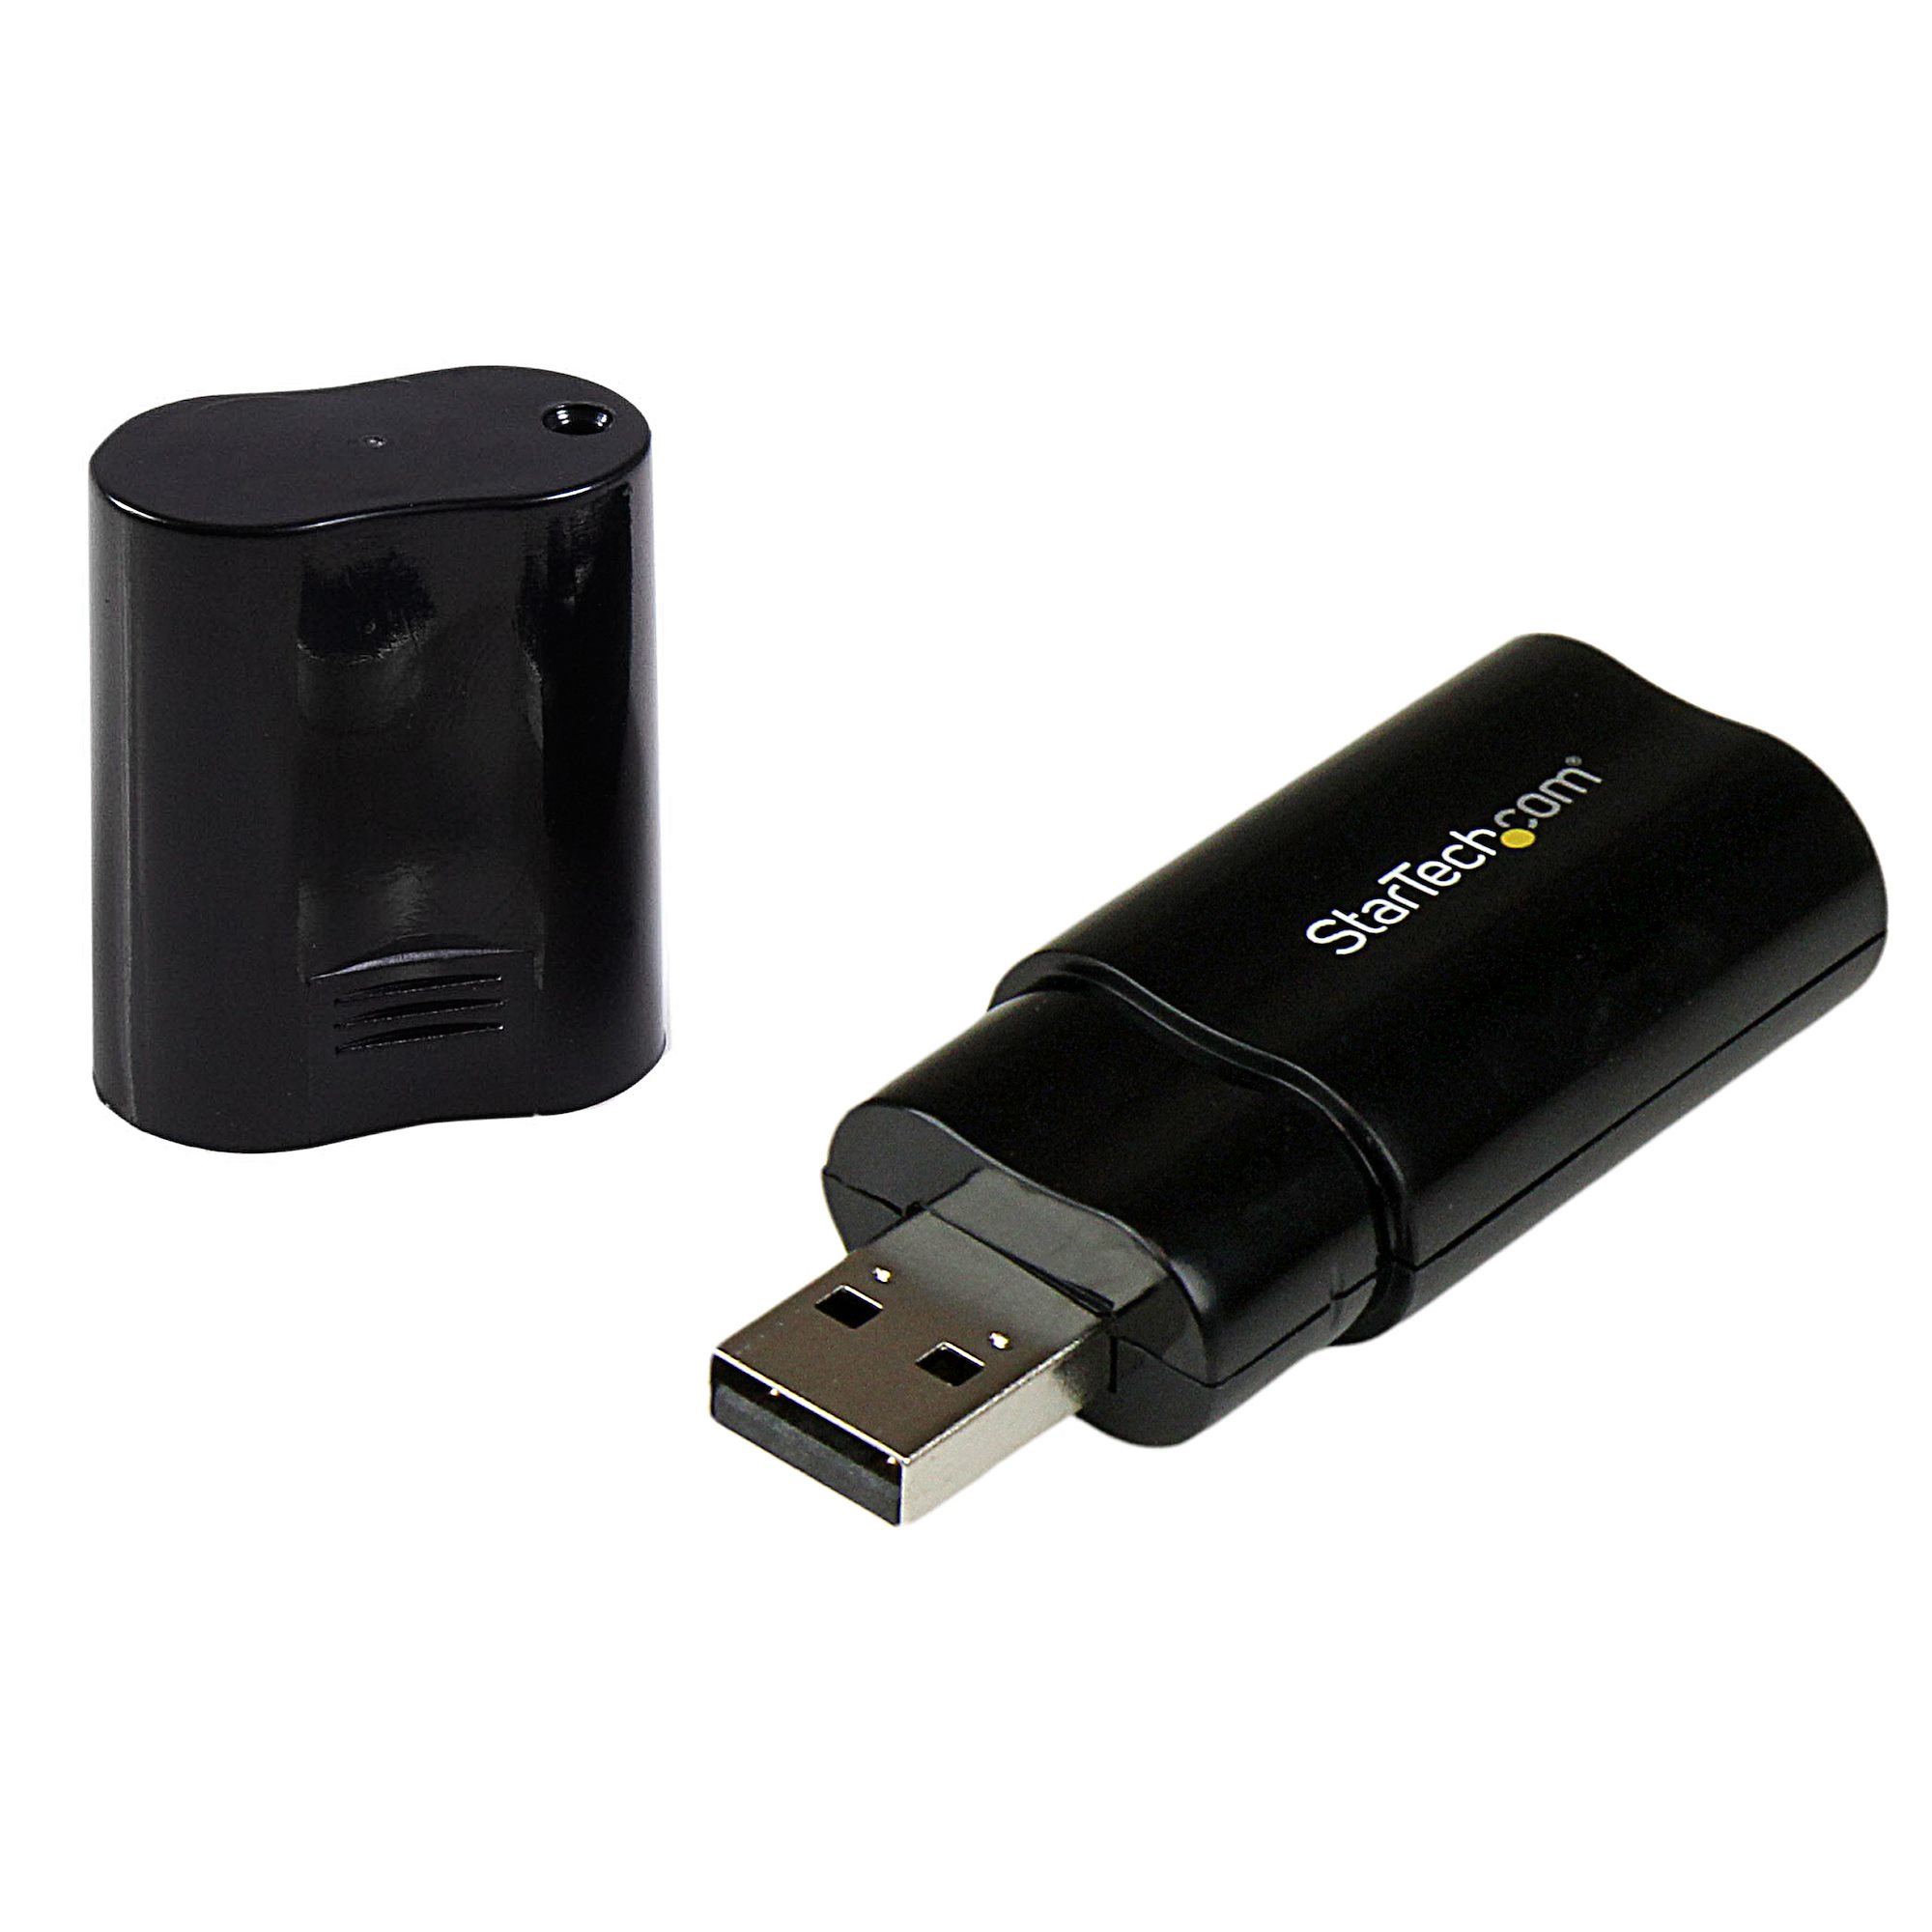 tieners Panter Sympton USB Audio Adapter External Sound Card - USB Audio Adapters | StarTech.com